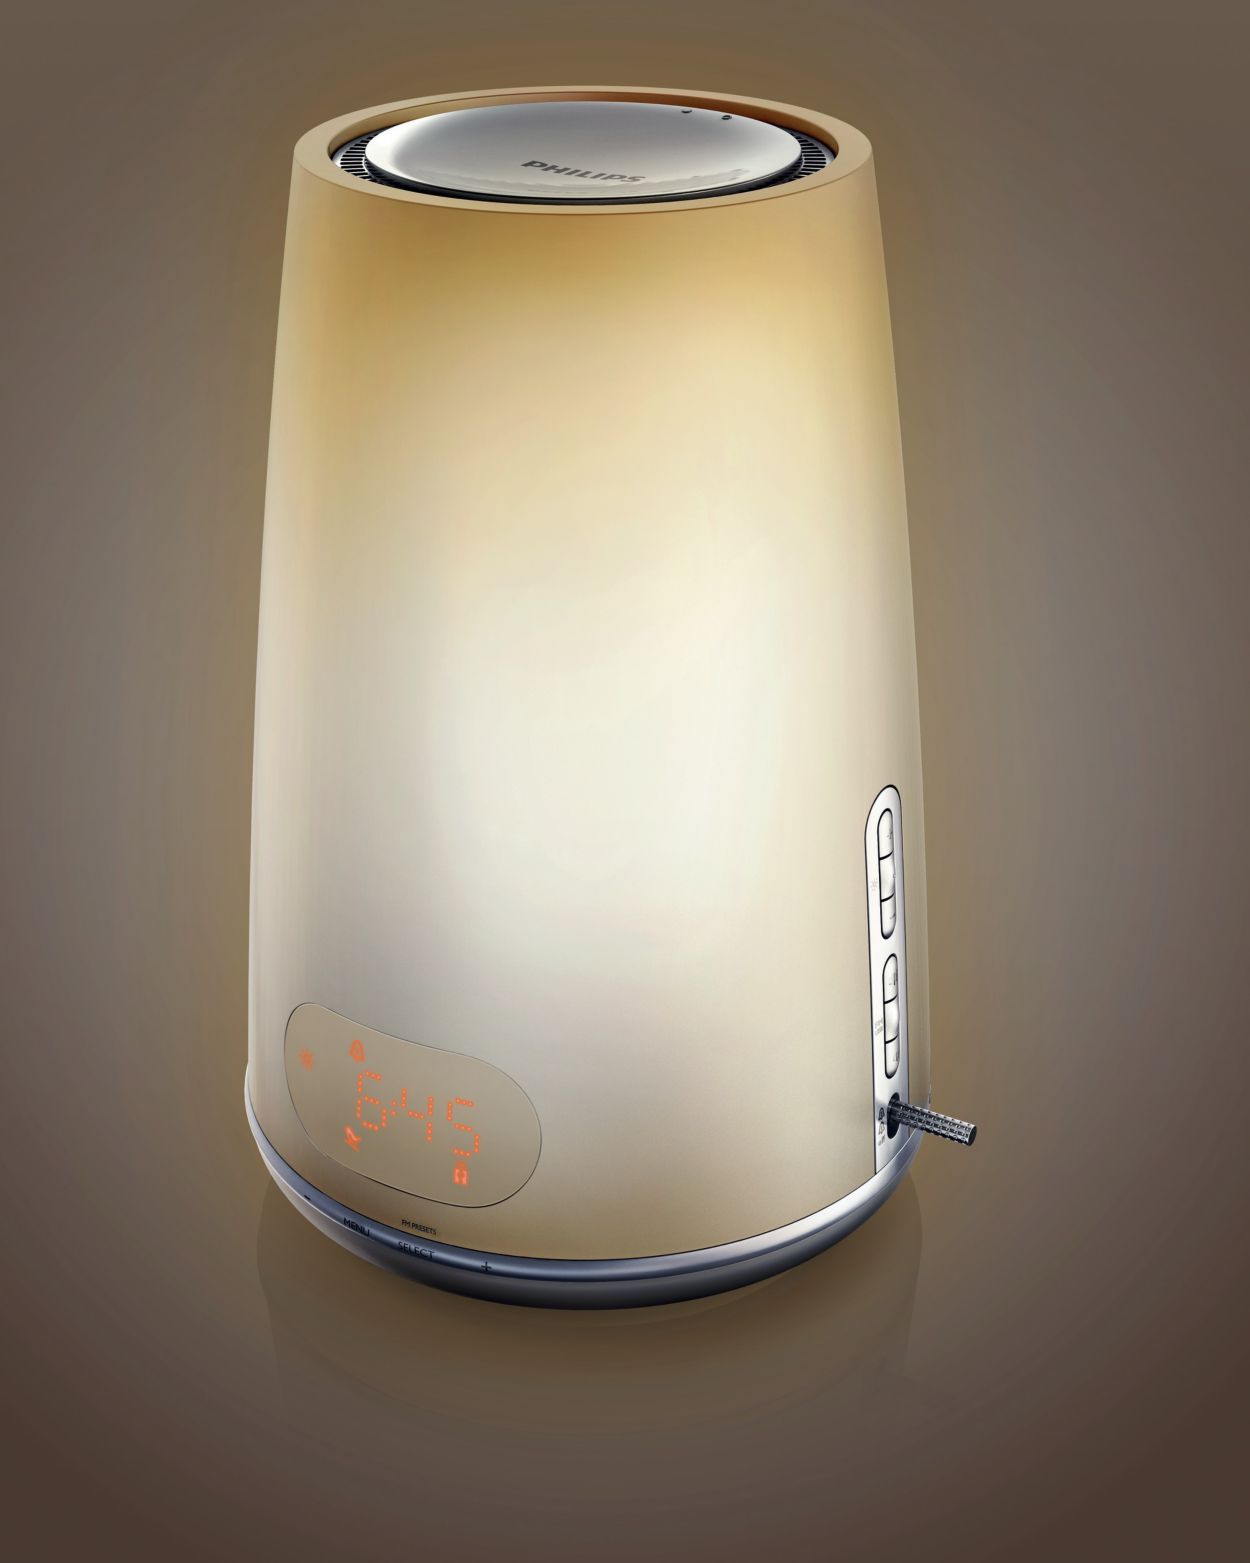 Lampe-réveil HF3471/60